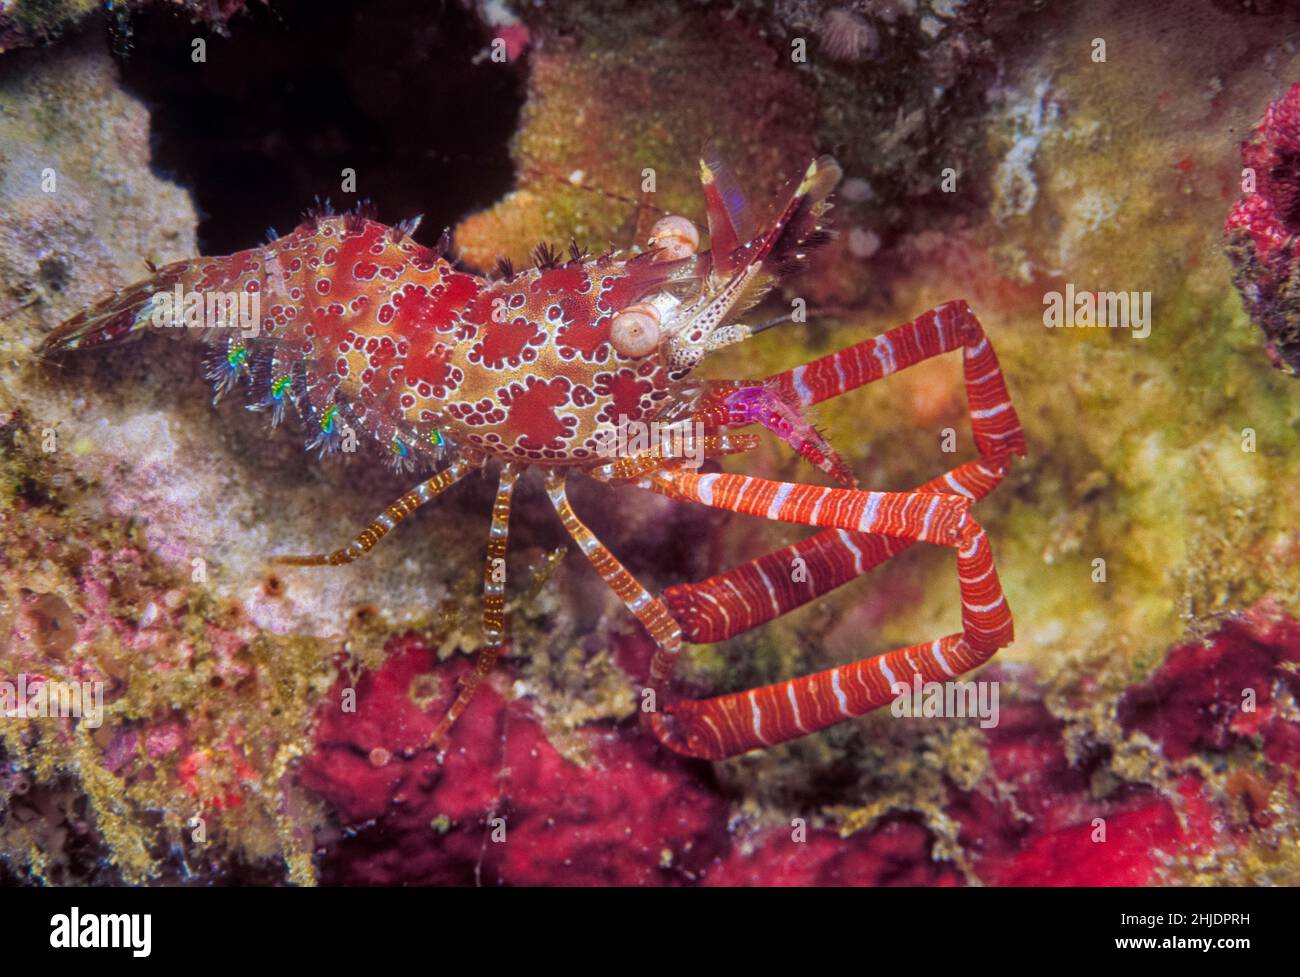 Male Coral Marble Shrimp, Saron neglectus, showing distinctive enlongated claw arms. Mergui Archipelago, Myanmar, Andaman Sea, Indian Ocean Stock Photo